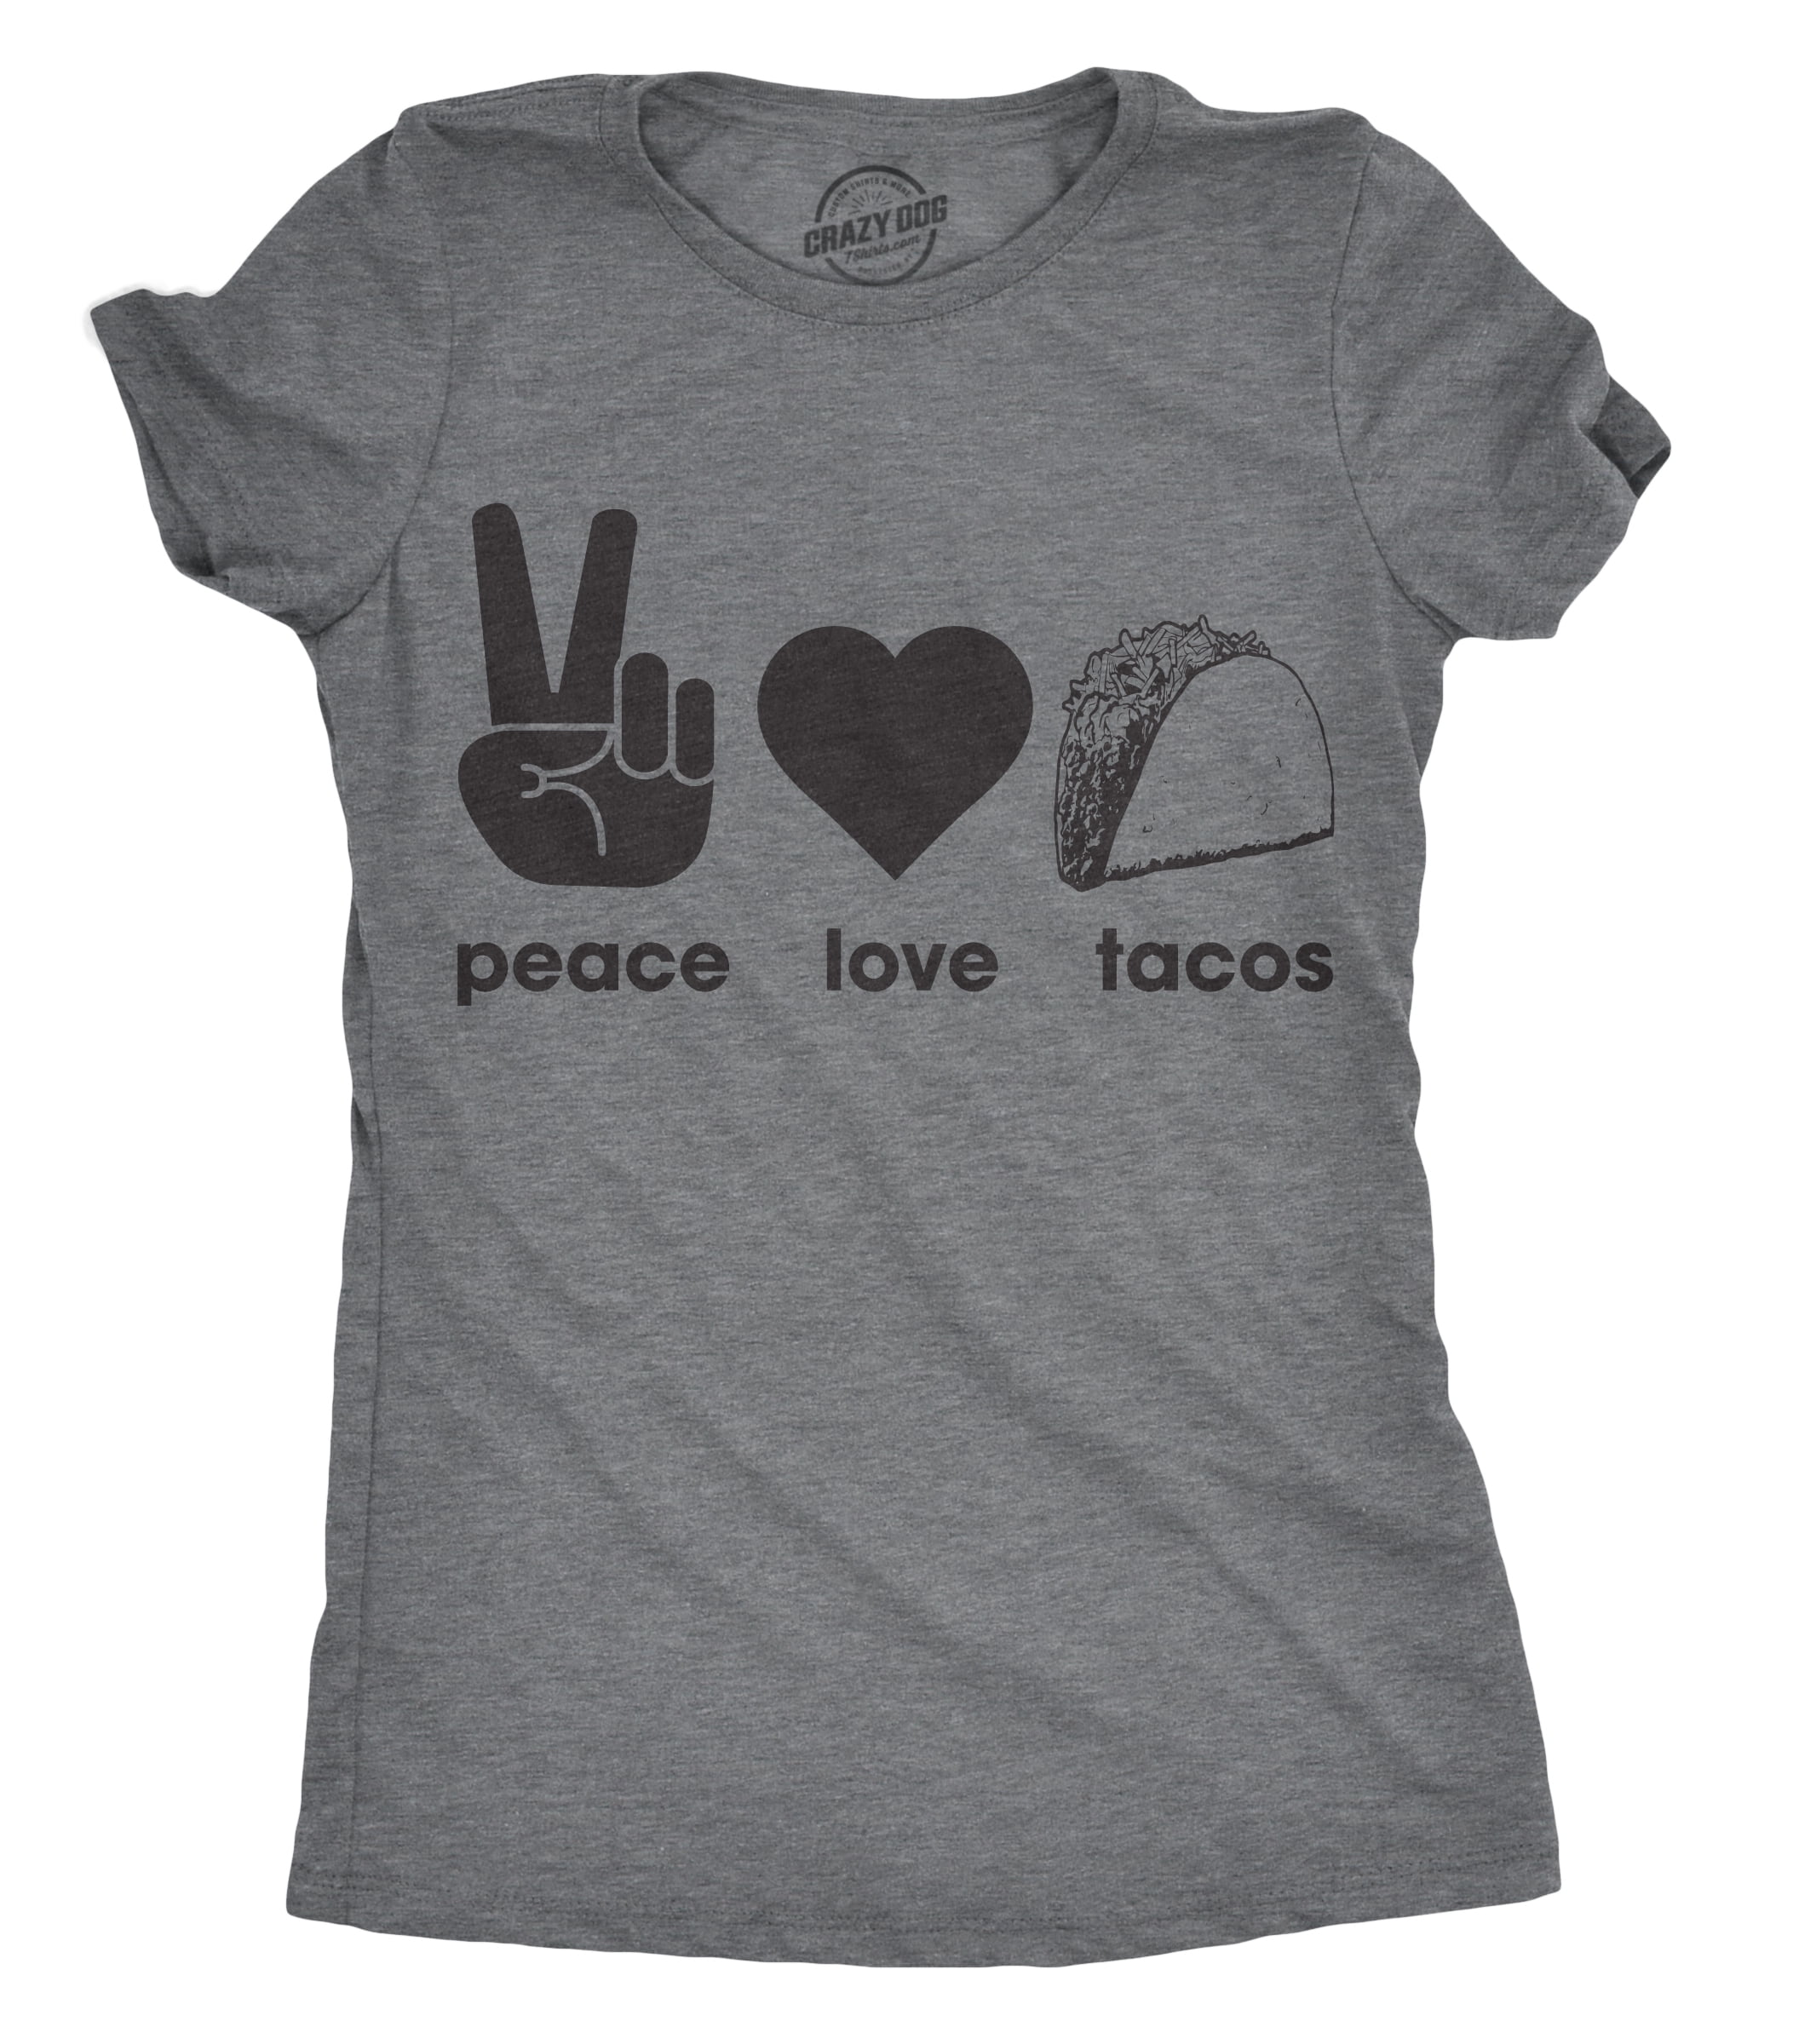 Love Wine Shirt Wine Lover Gift Peace Peace and Wine Tee Peace T-Shirt Wine Vinyl Graphic Tee Love Wine Lover T-Shirt. Gift For Her